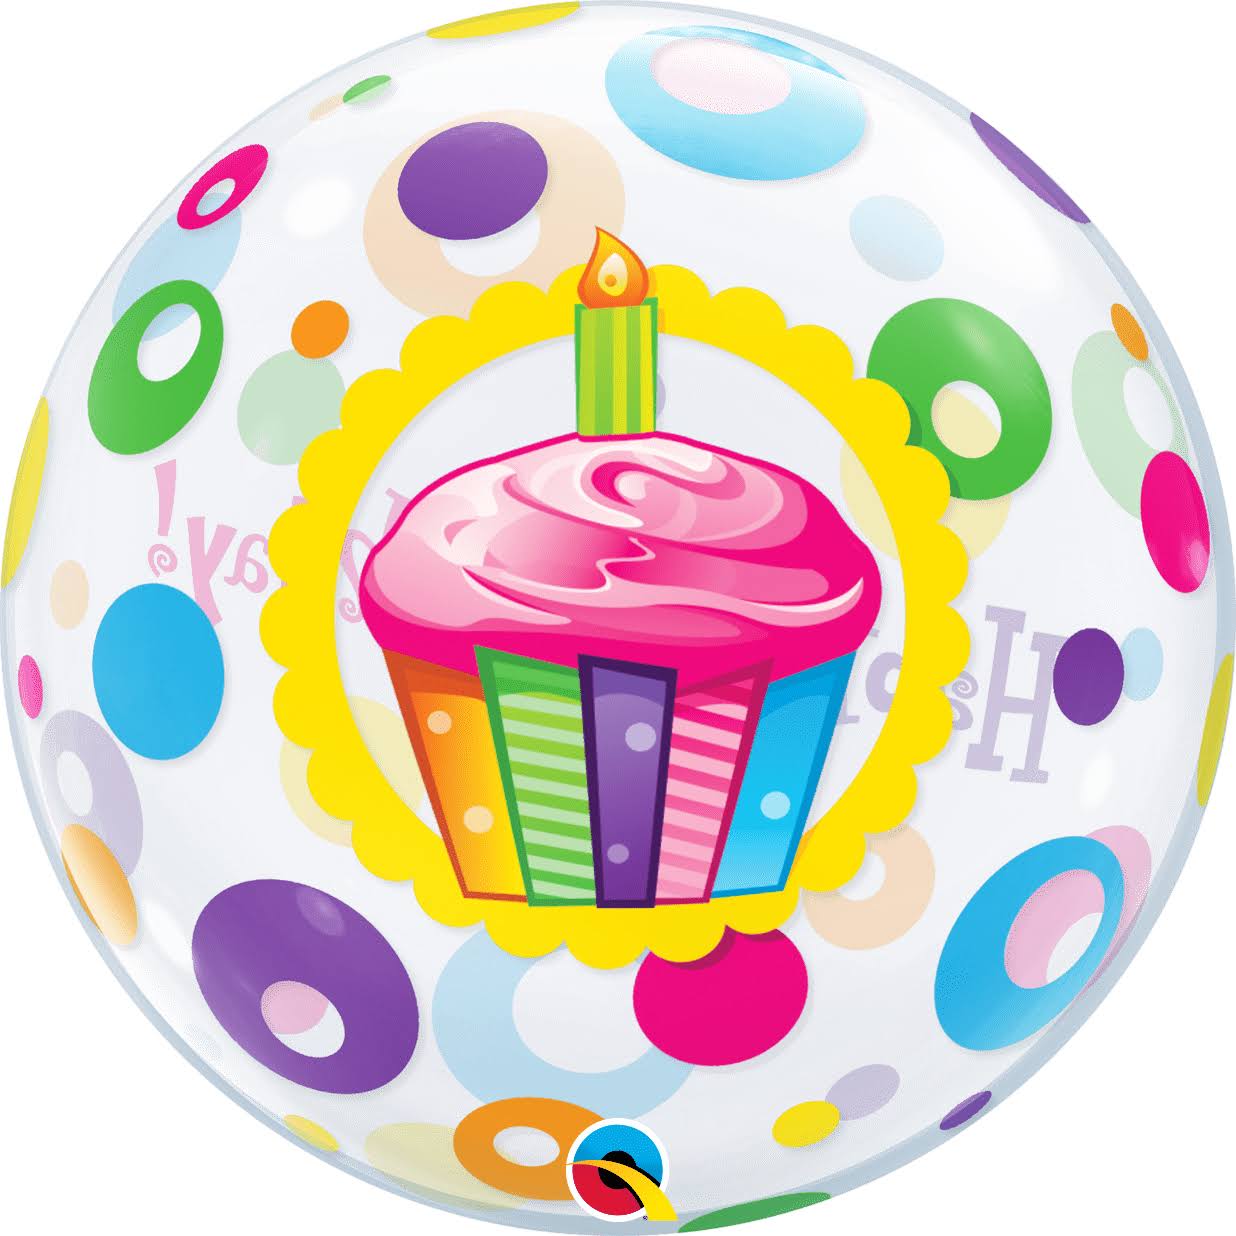 Cupcake and Dots Birthday Bubble Balloon (D)